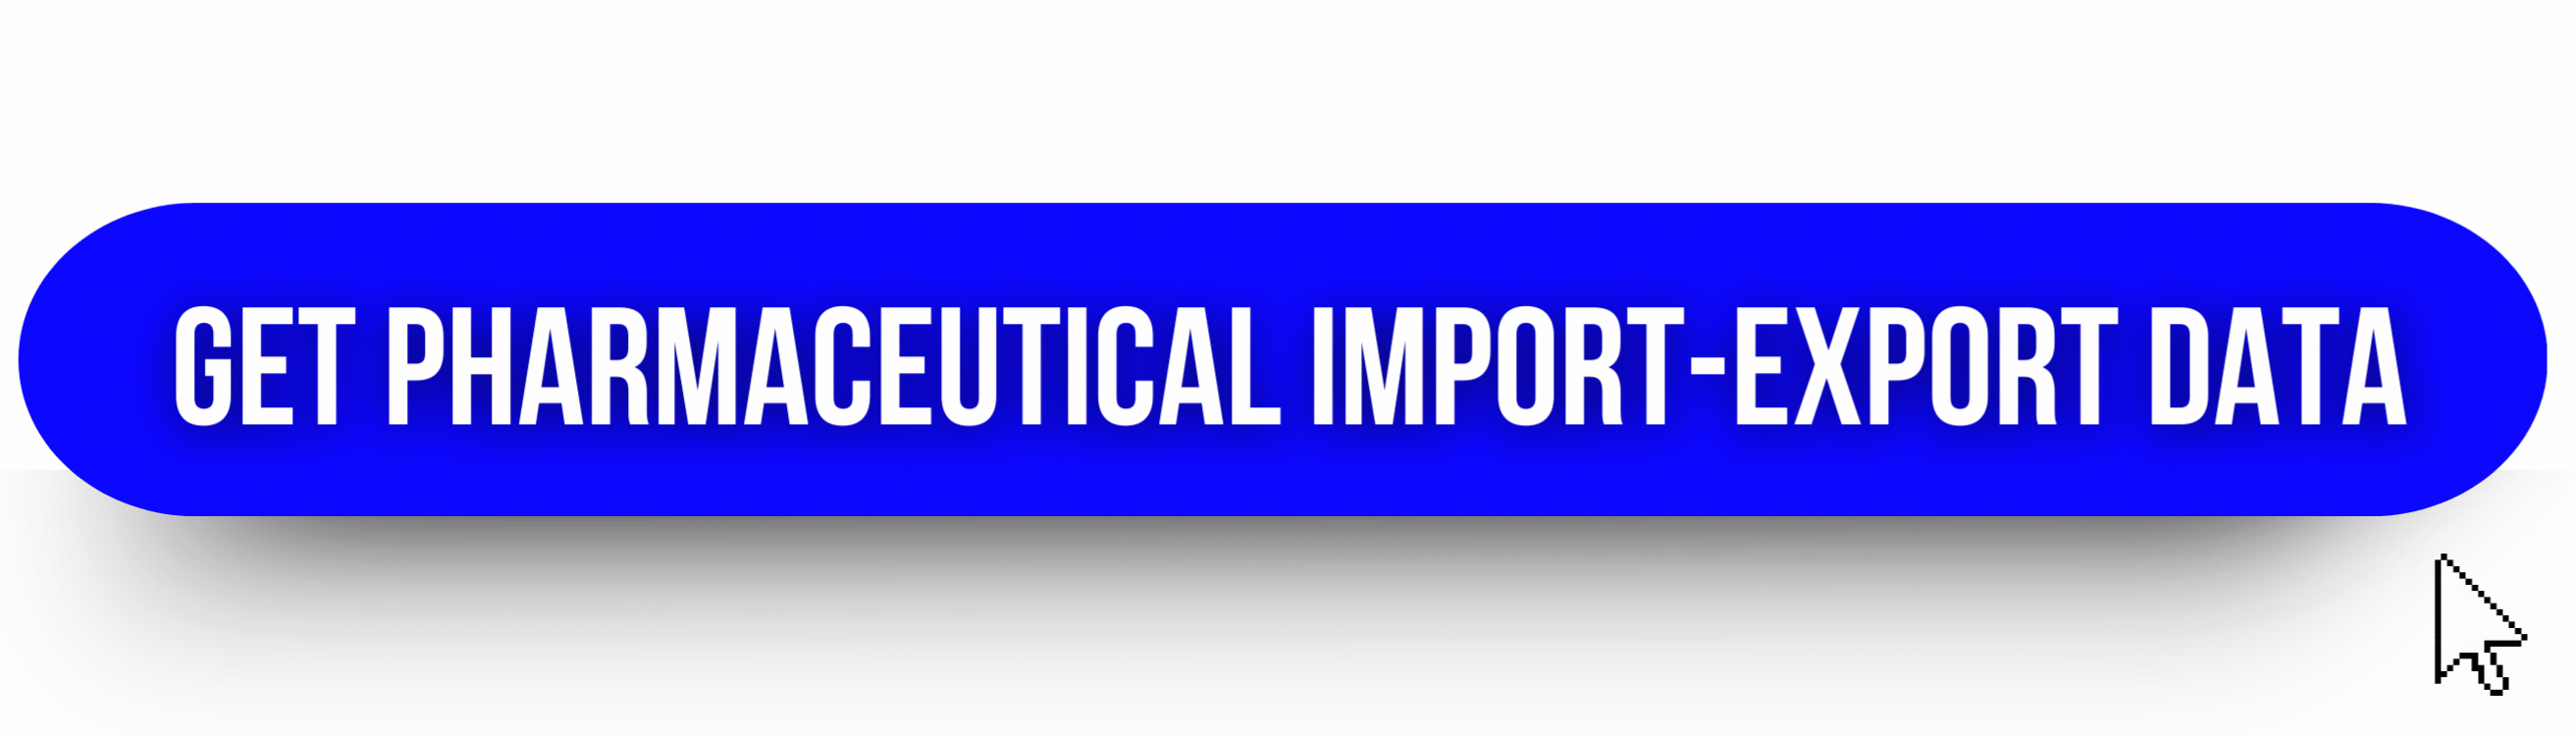 top pharmaceutical importer exporter data